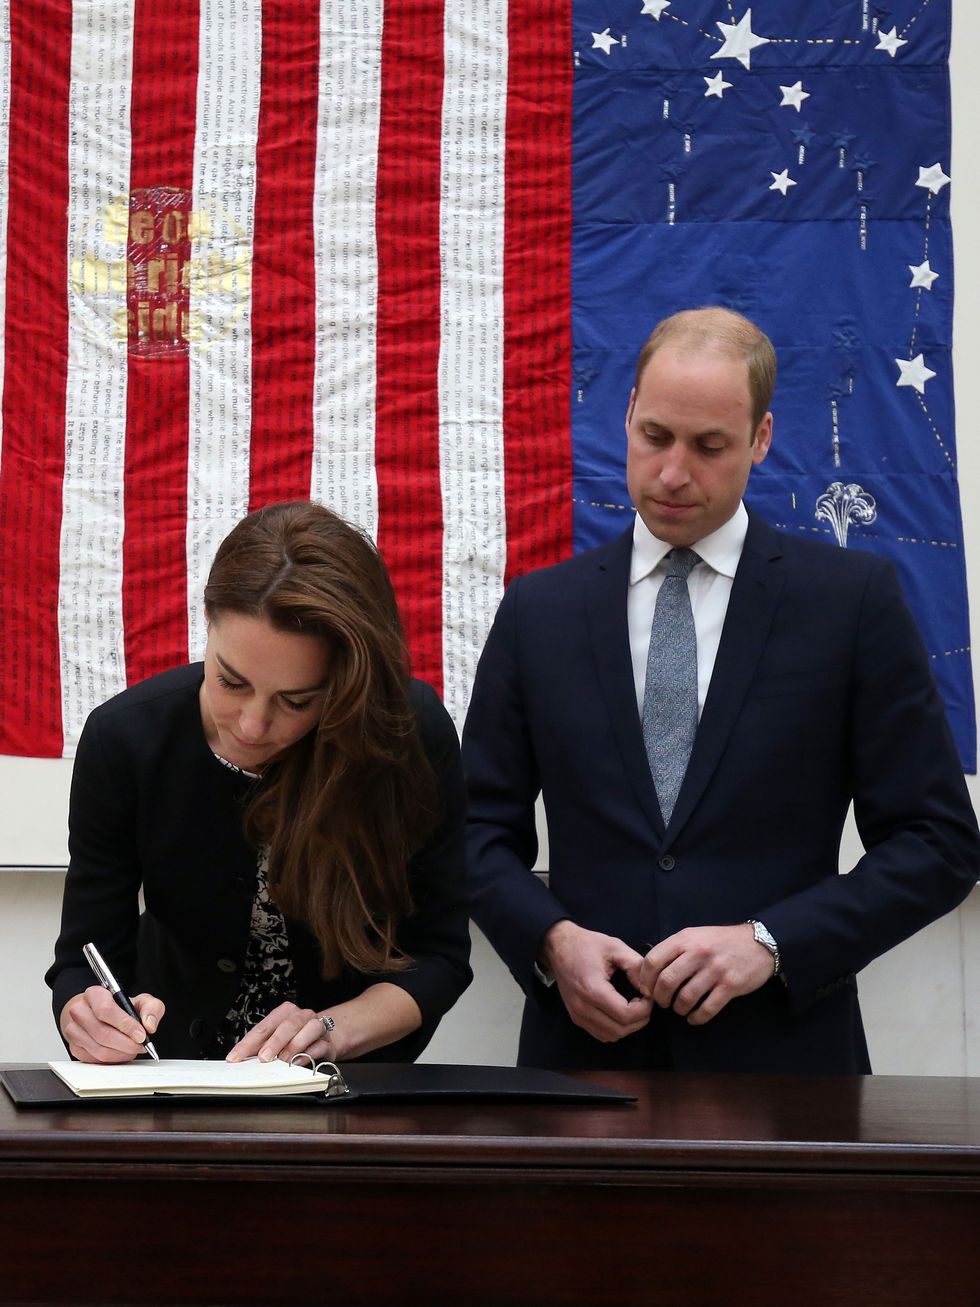 Duke and Duchess of Cambridge sign Orlando condolence book